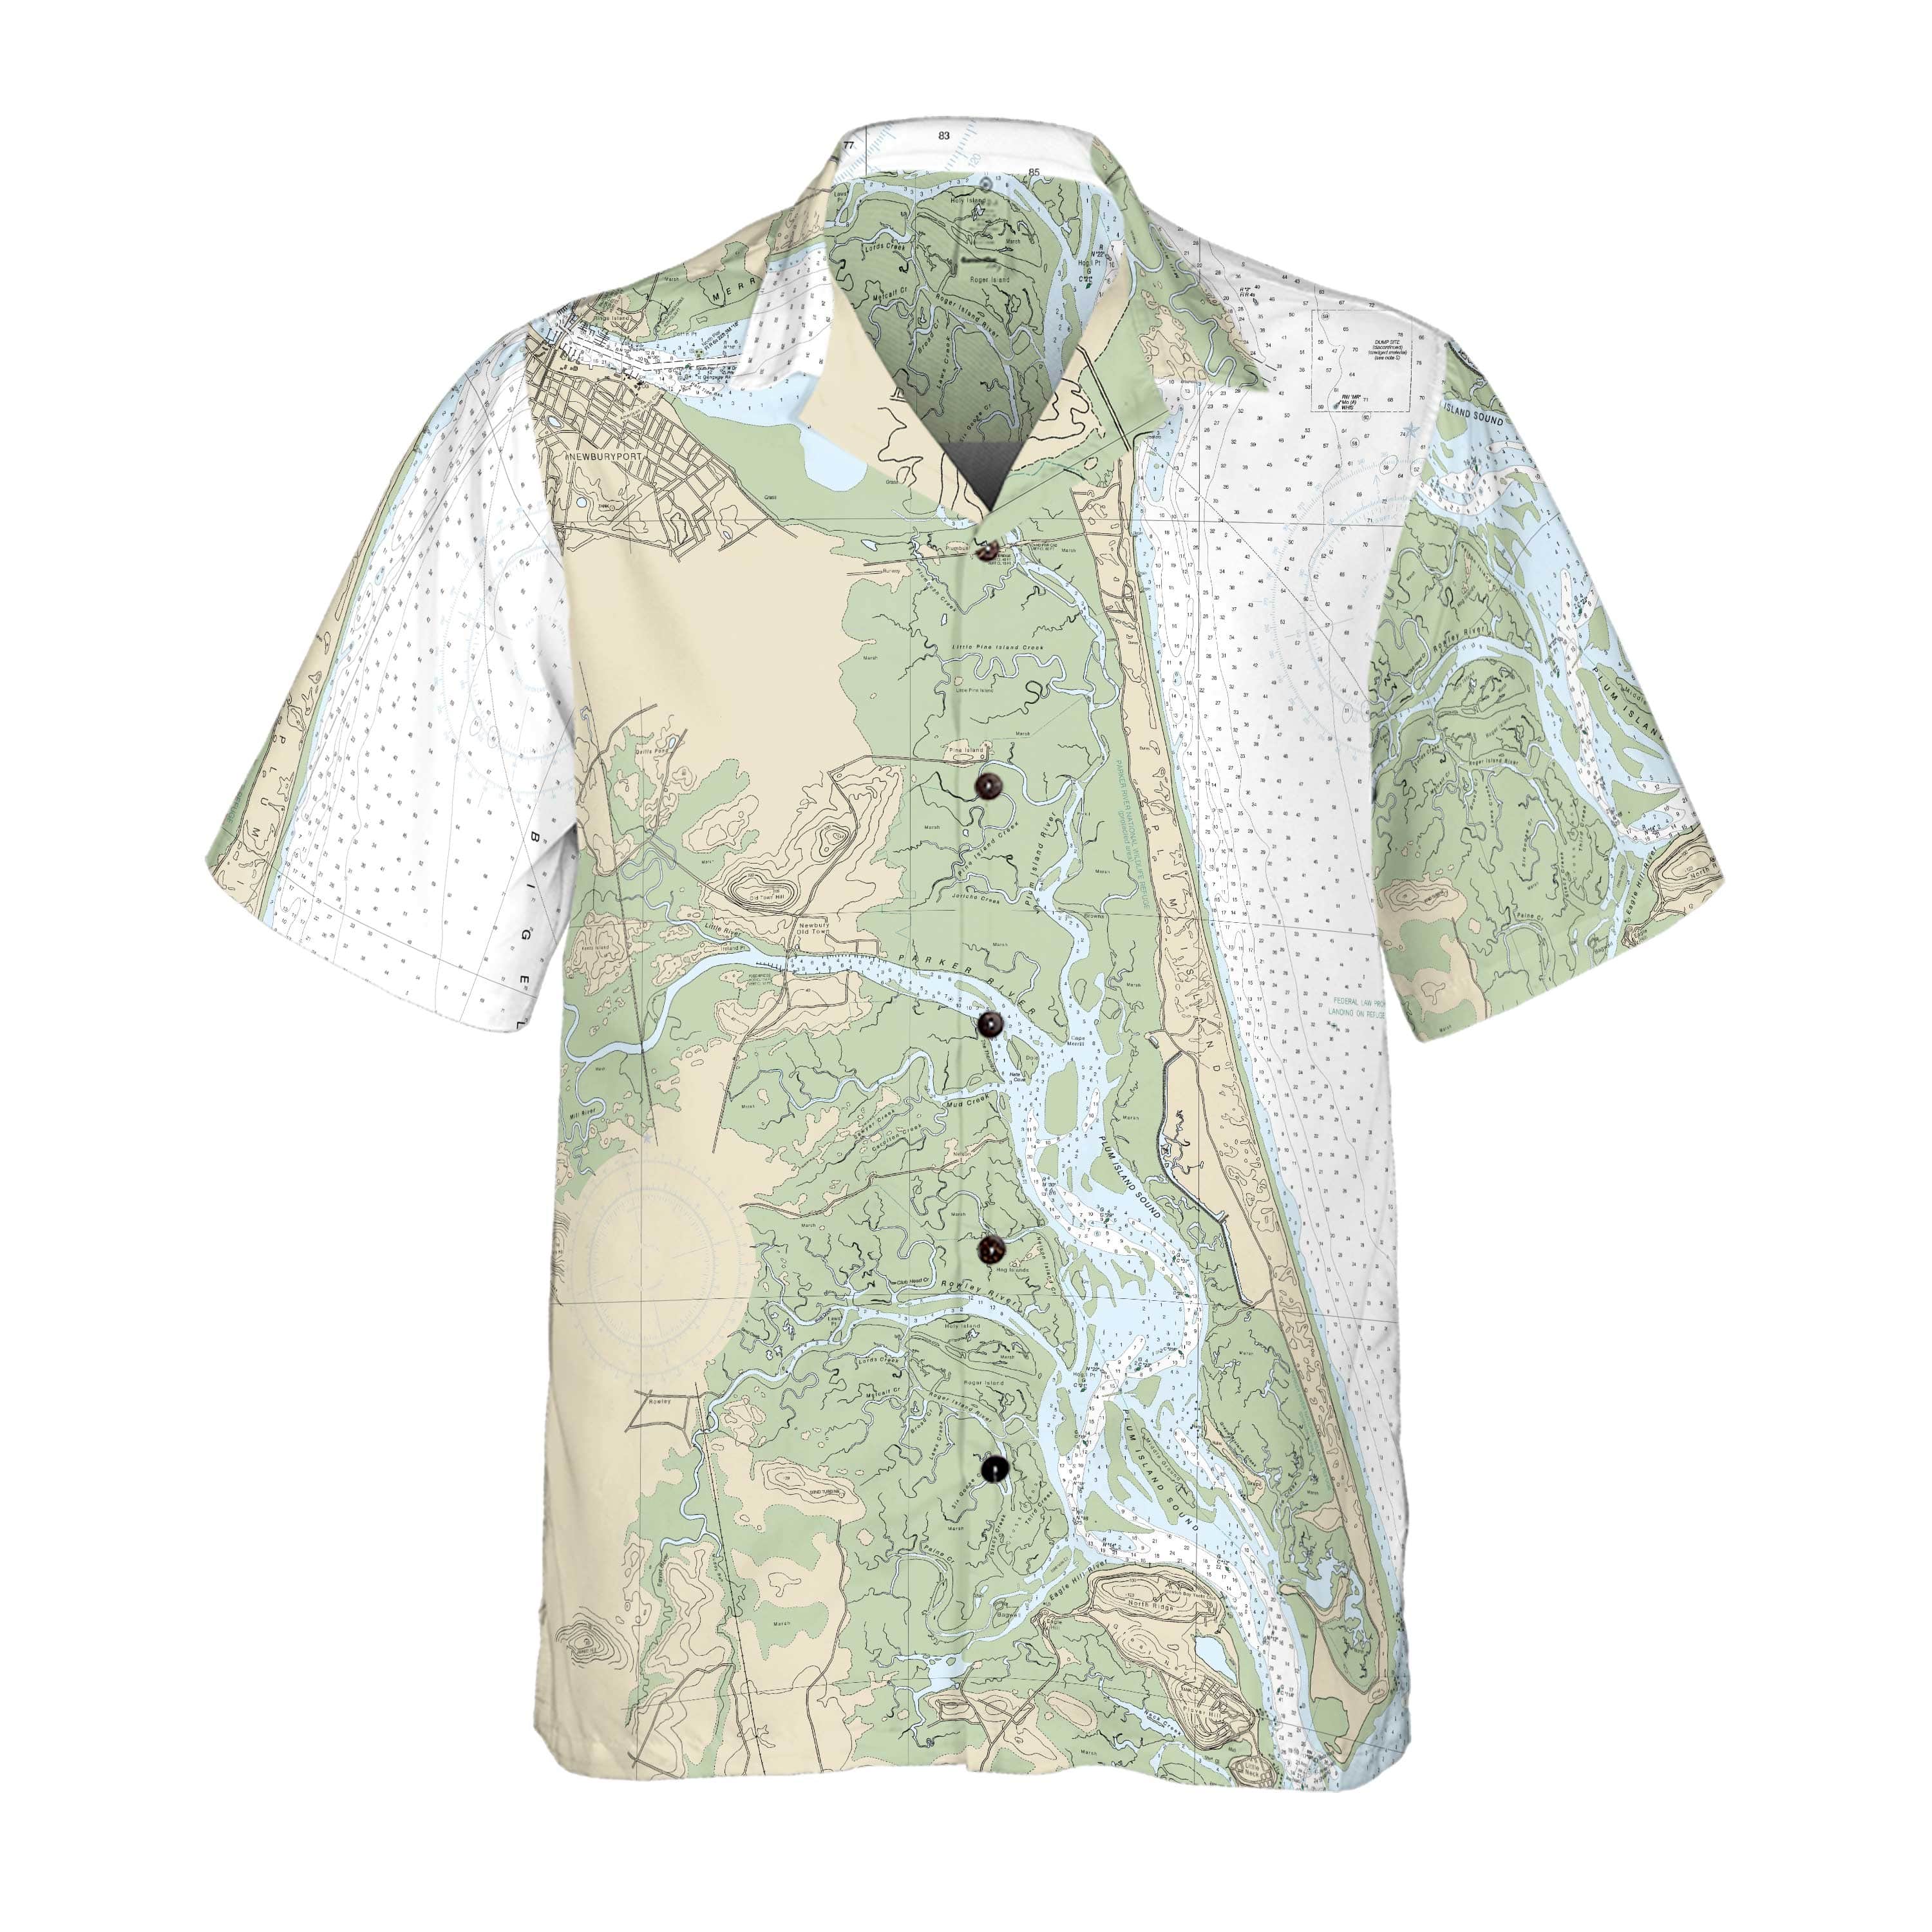 The Plum Island Coconut Button Camp Shirt